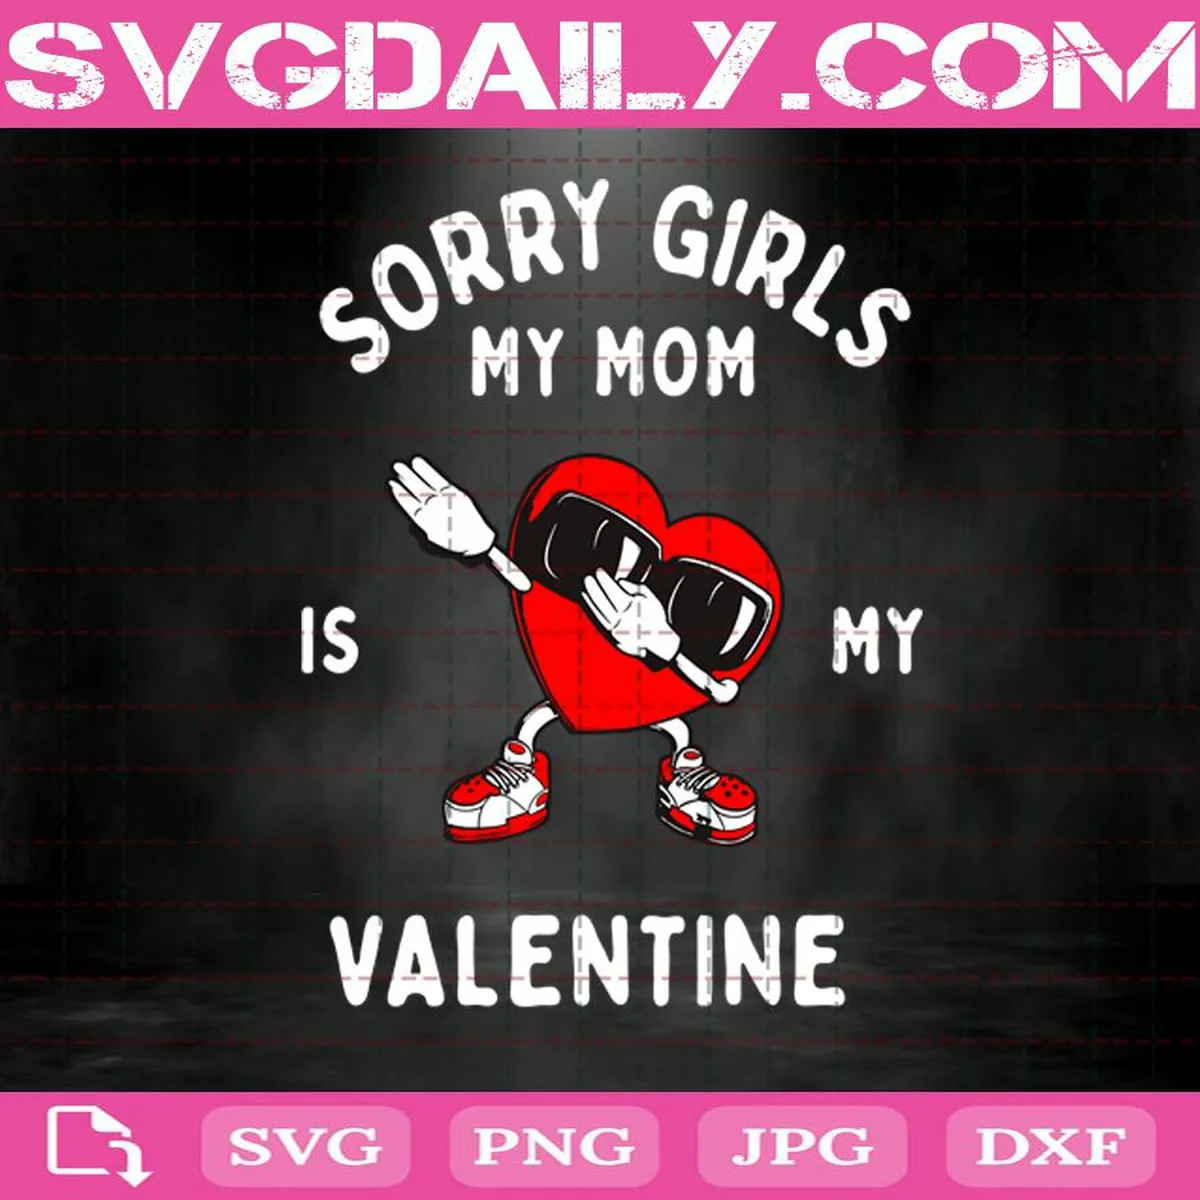 Sorry Girls My Mom Is My Valentine Svg, Heart Dancing Svg, Heart Wear Glasses Svg, Valentine’s Day Svg, Mom Svg